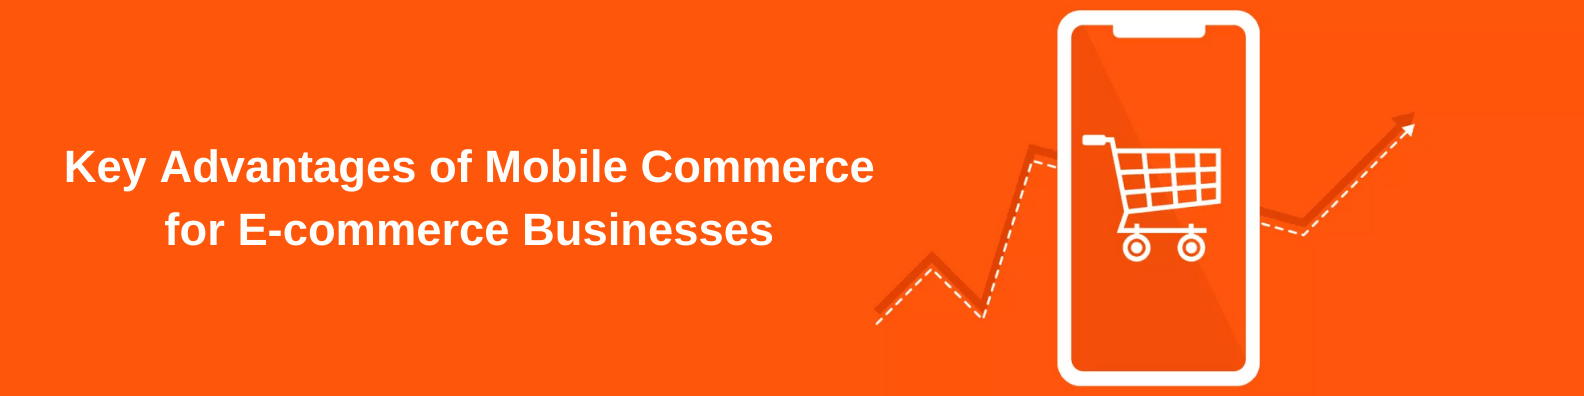 Key Advantages of Mobile Commerce for E-commerce Businesses